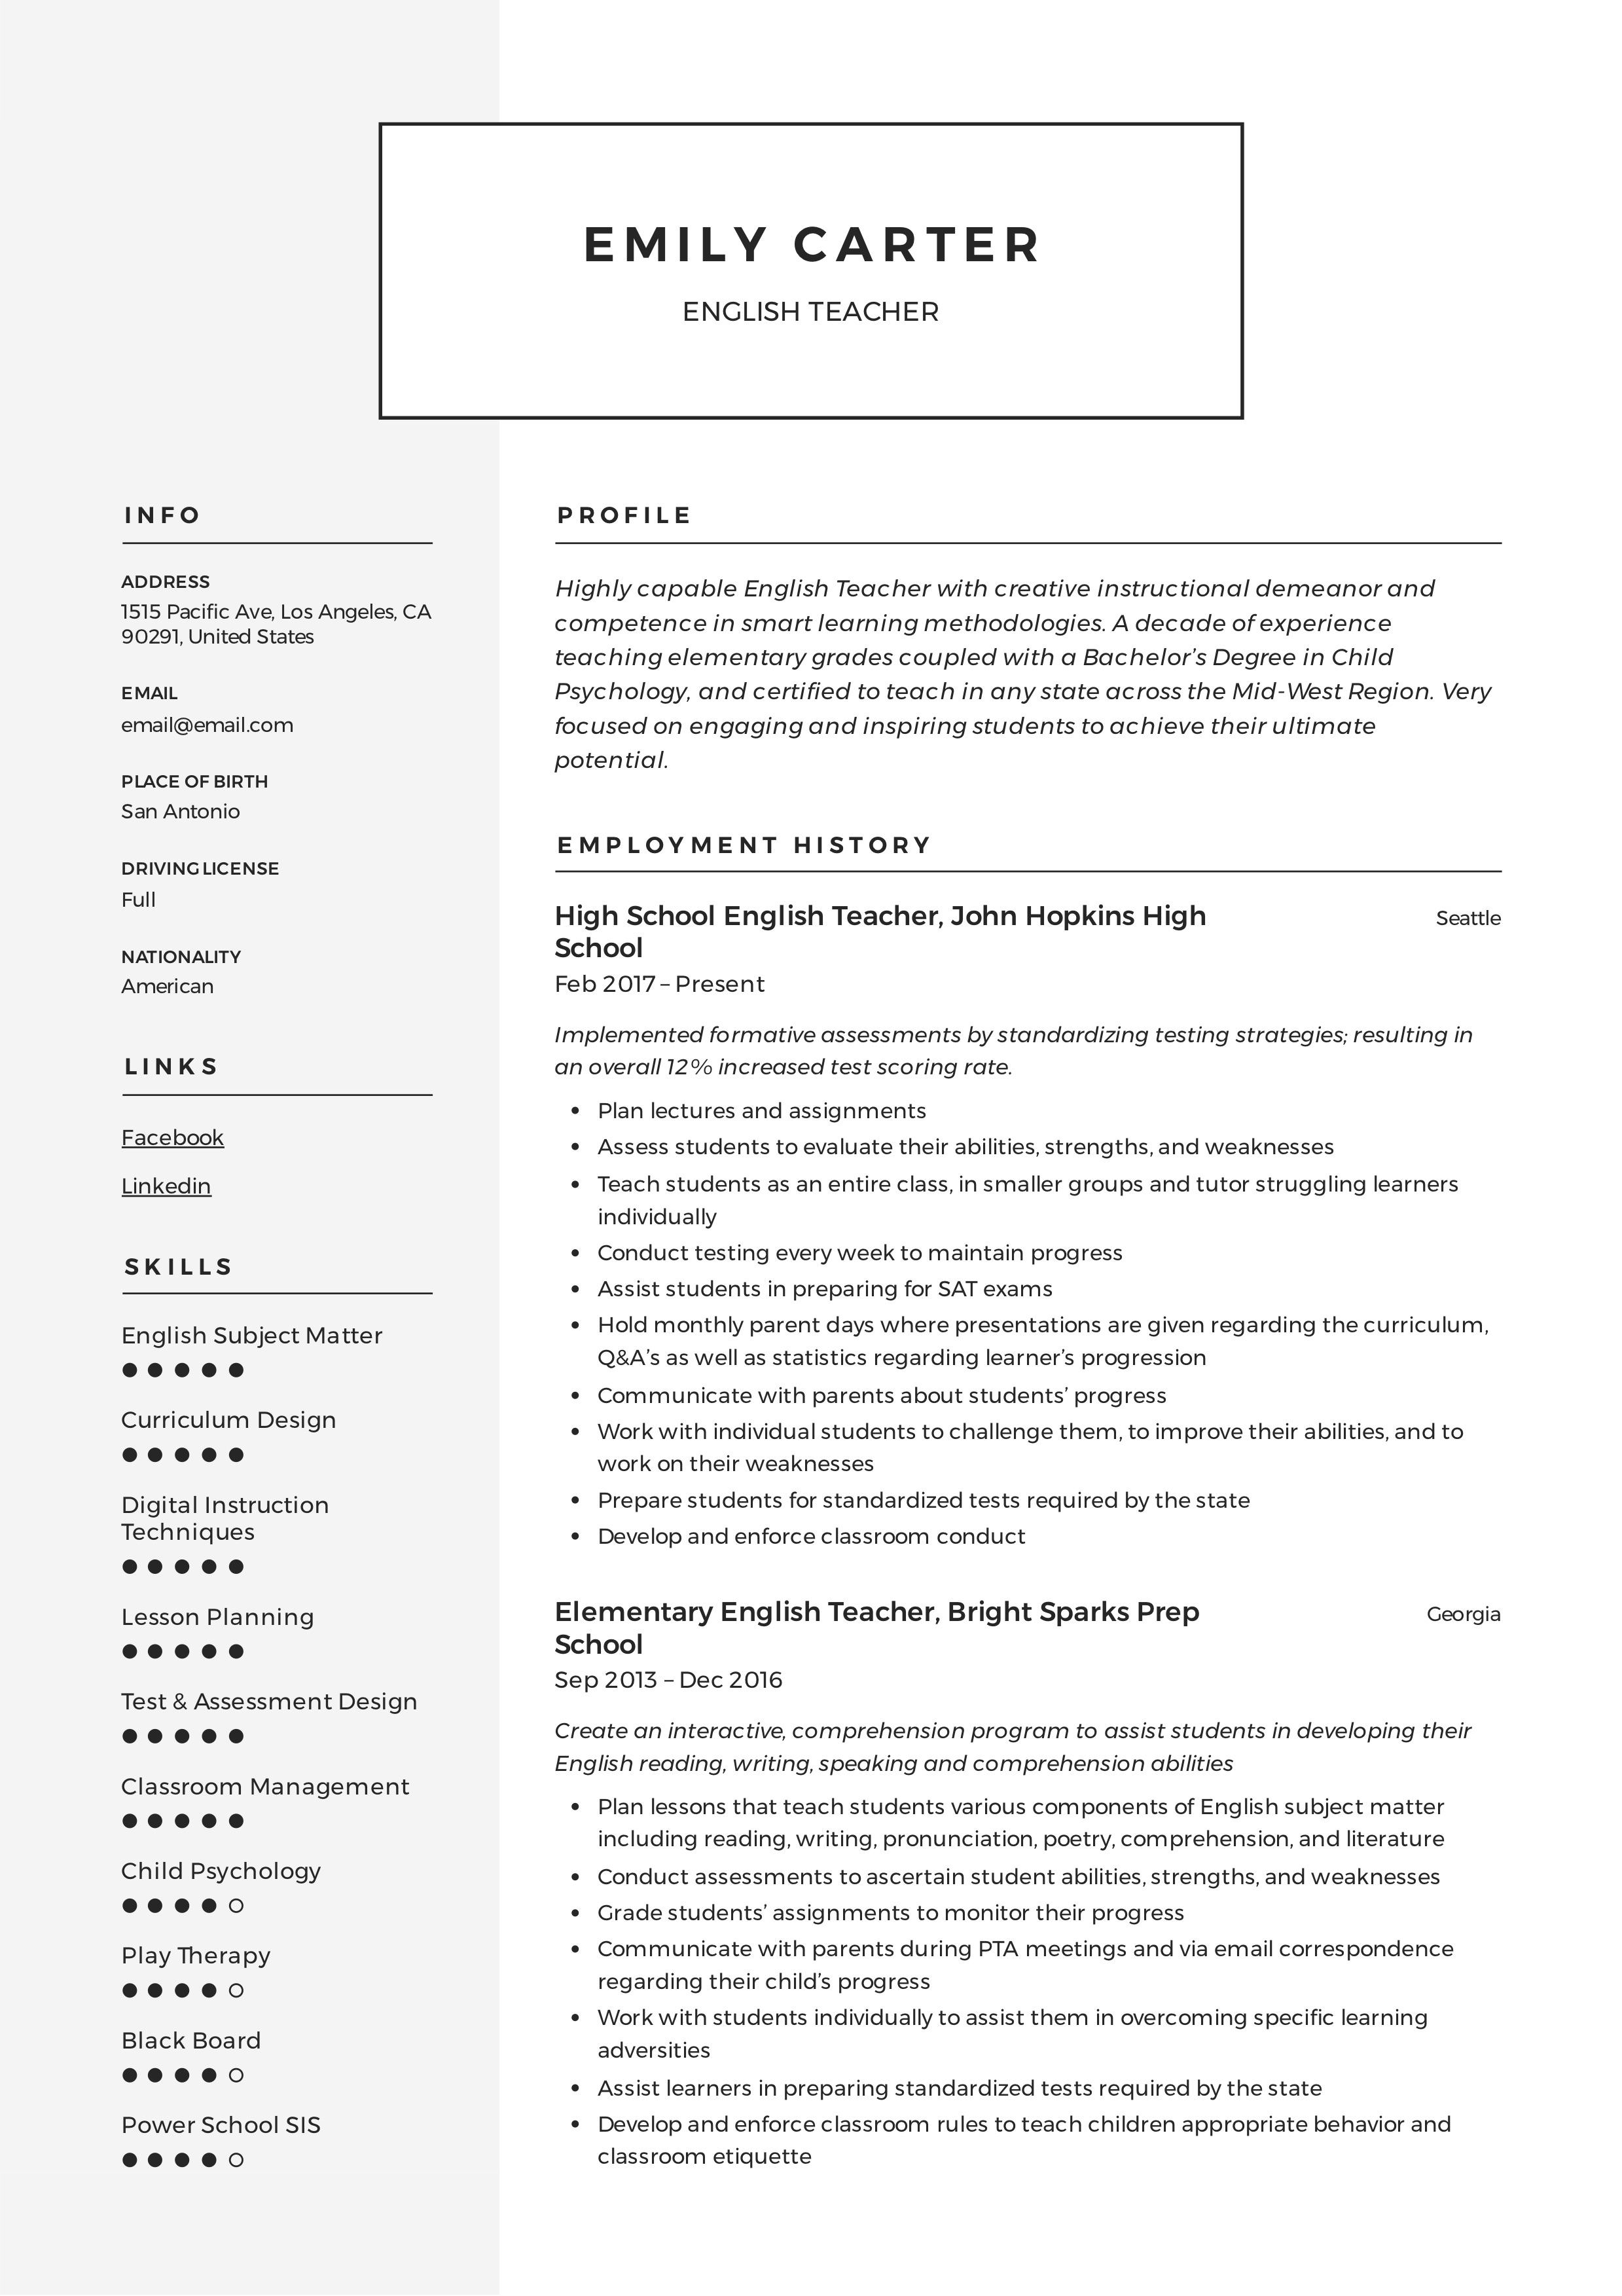 Free Downloadable Resume Templates 7 Free Resume Templates Free To Download And Use In